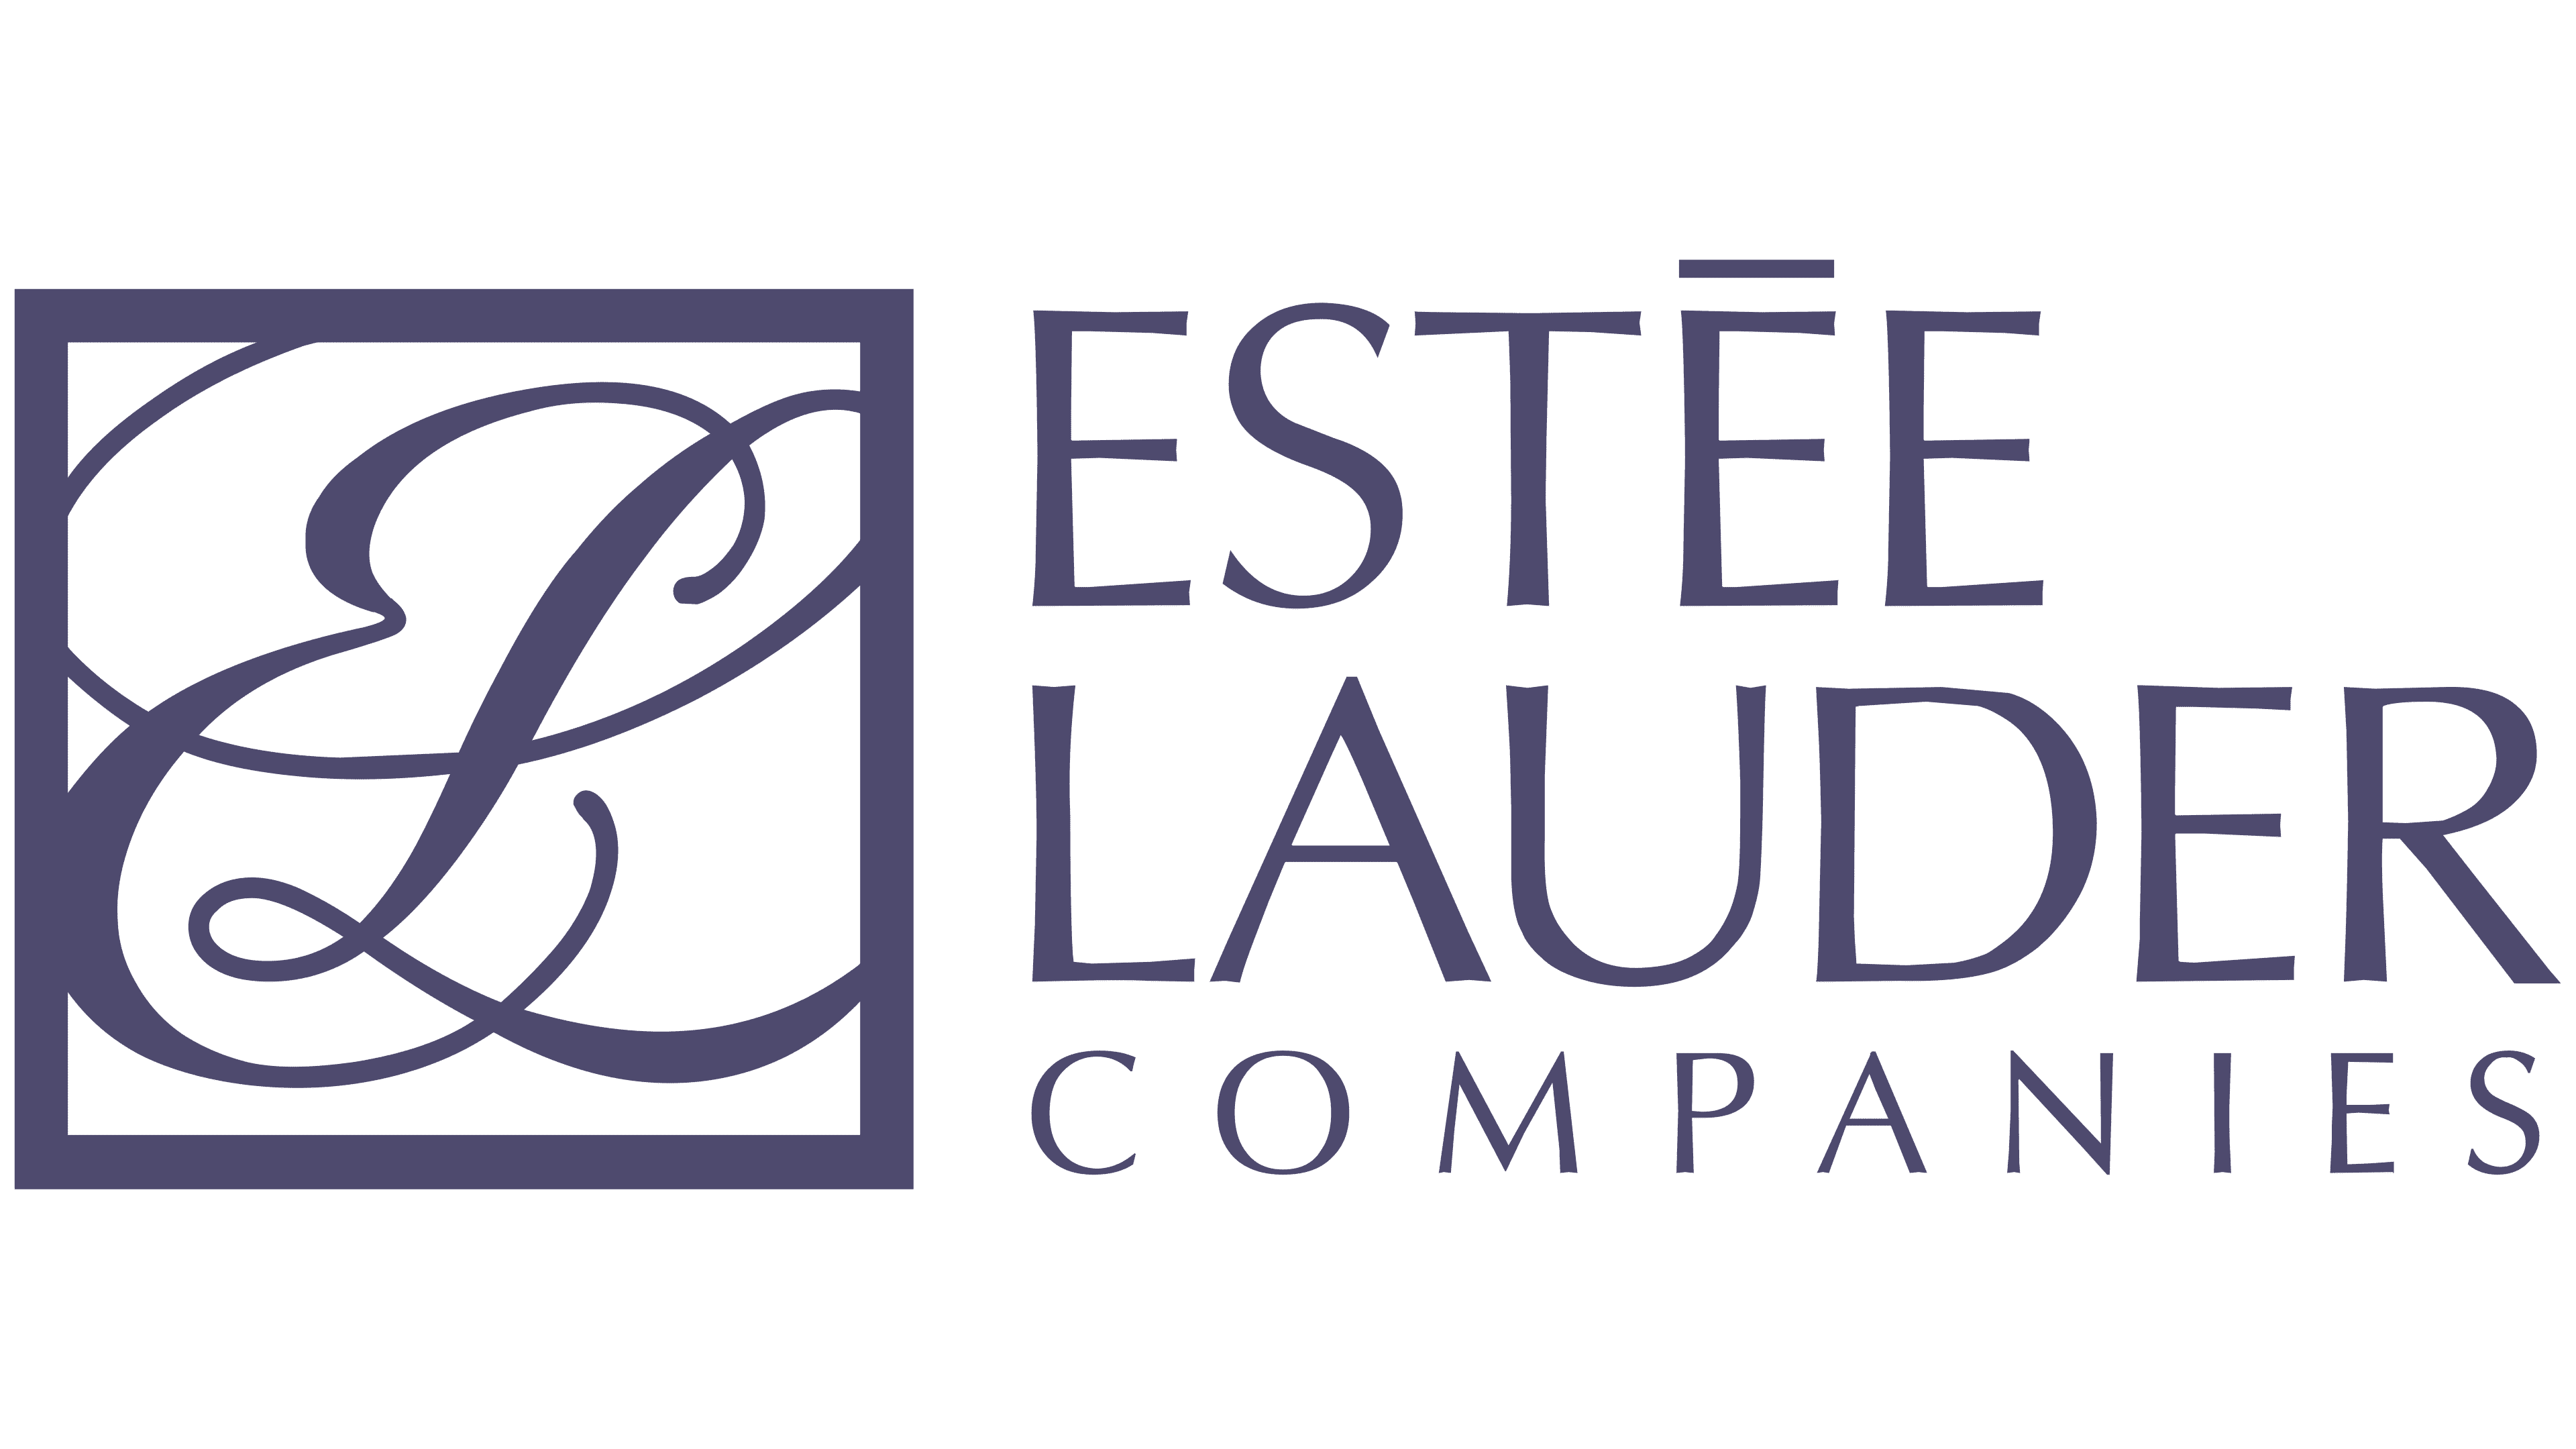 Estee Lauder Logo , symbol, meaning, history, PNG, brand